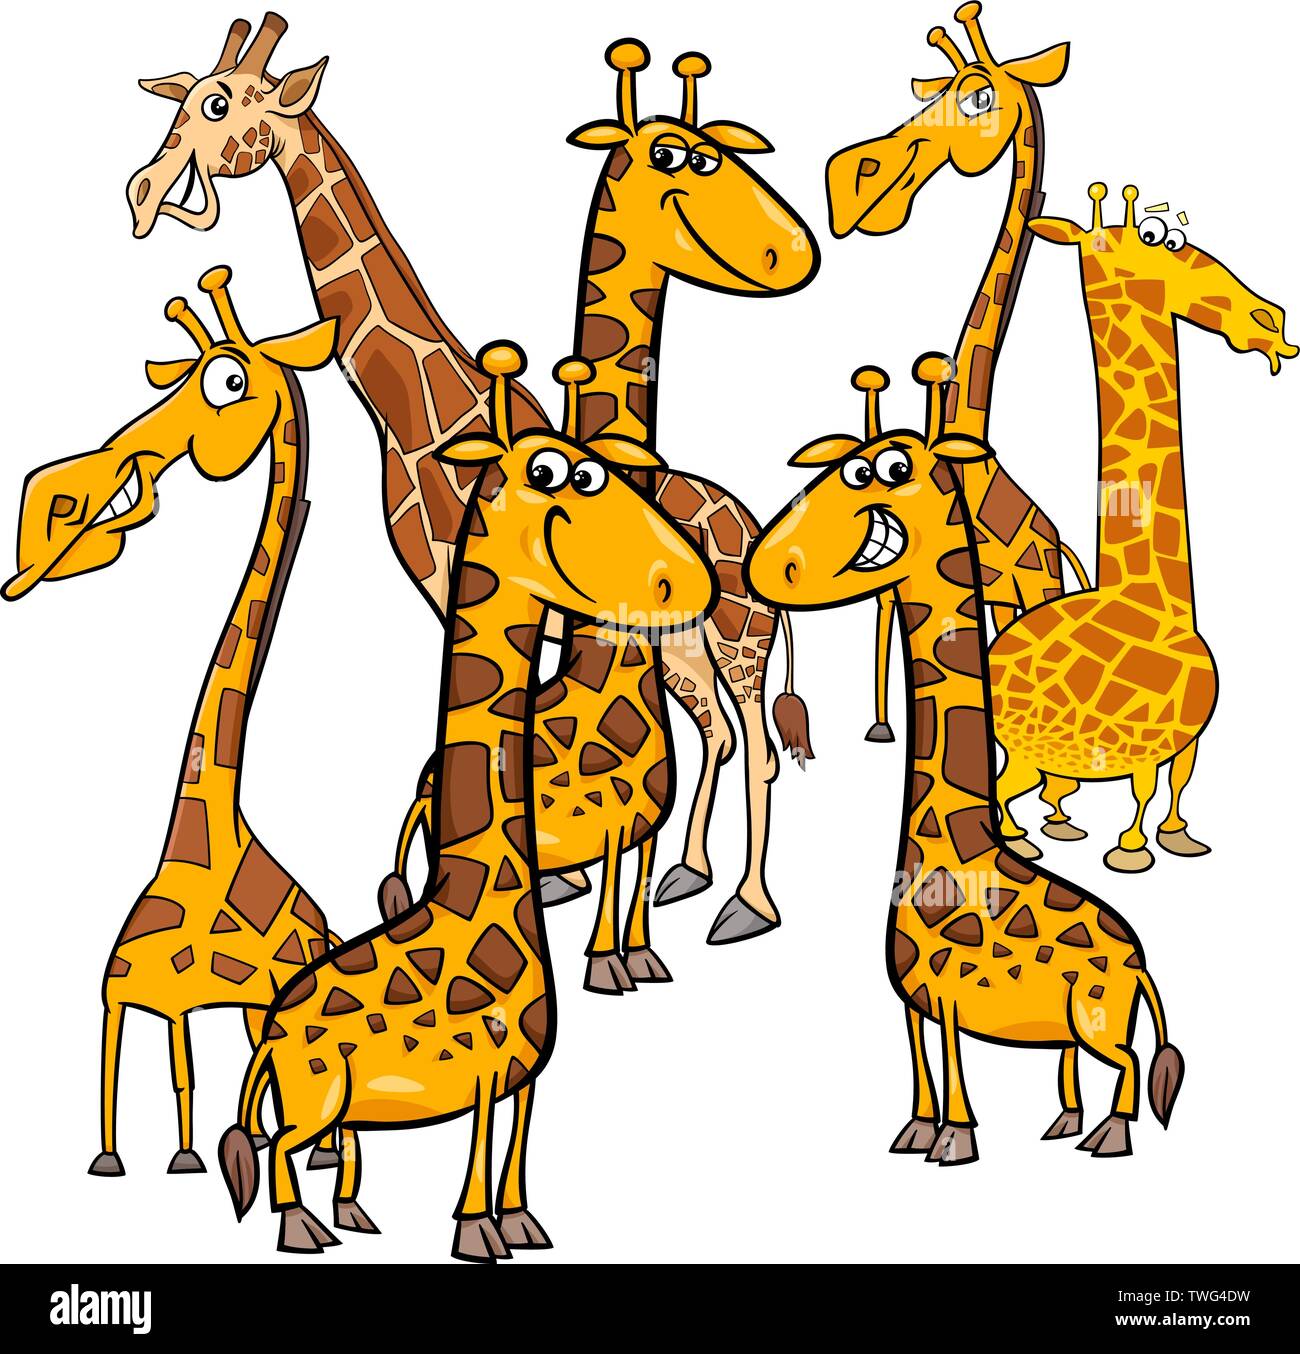 Cartoon Illustration of Funny Giraffes Animal Characters Group Stock Vector